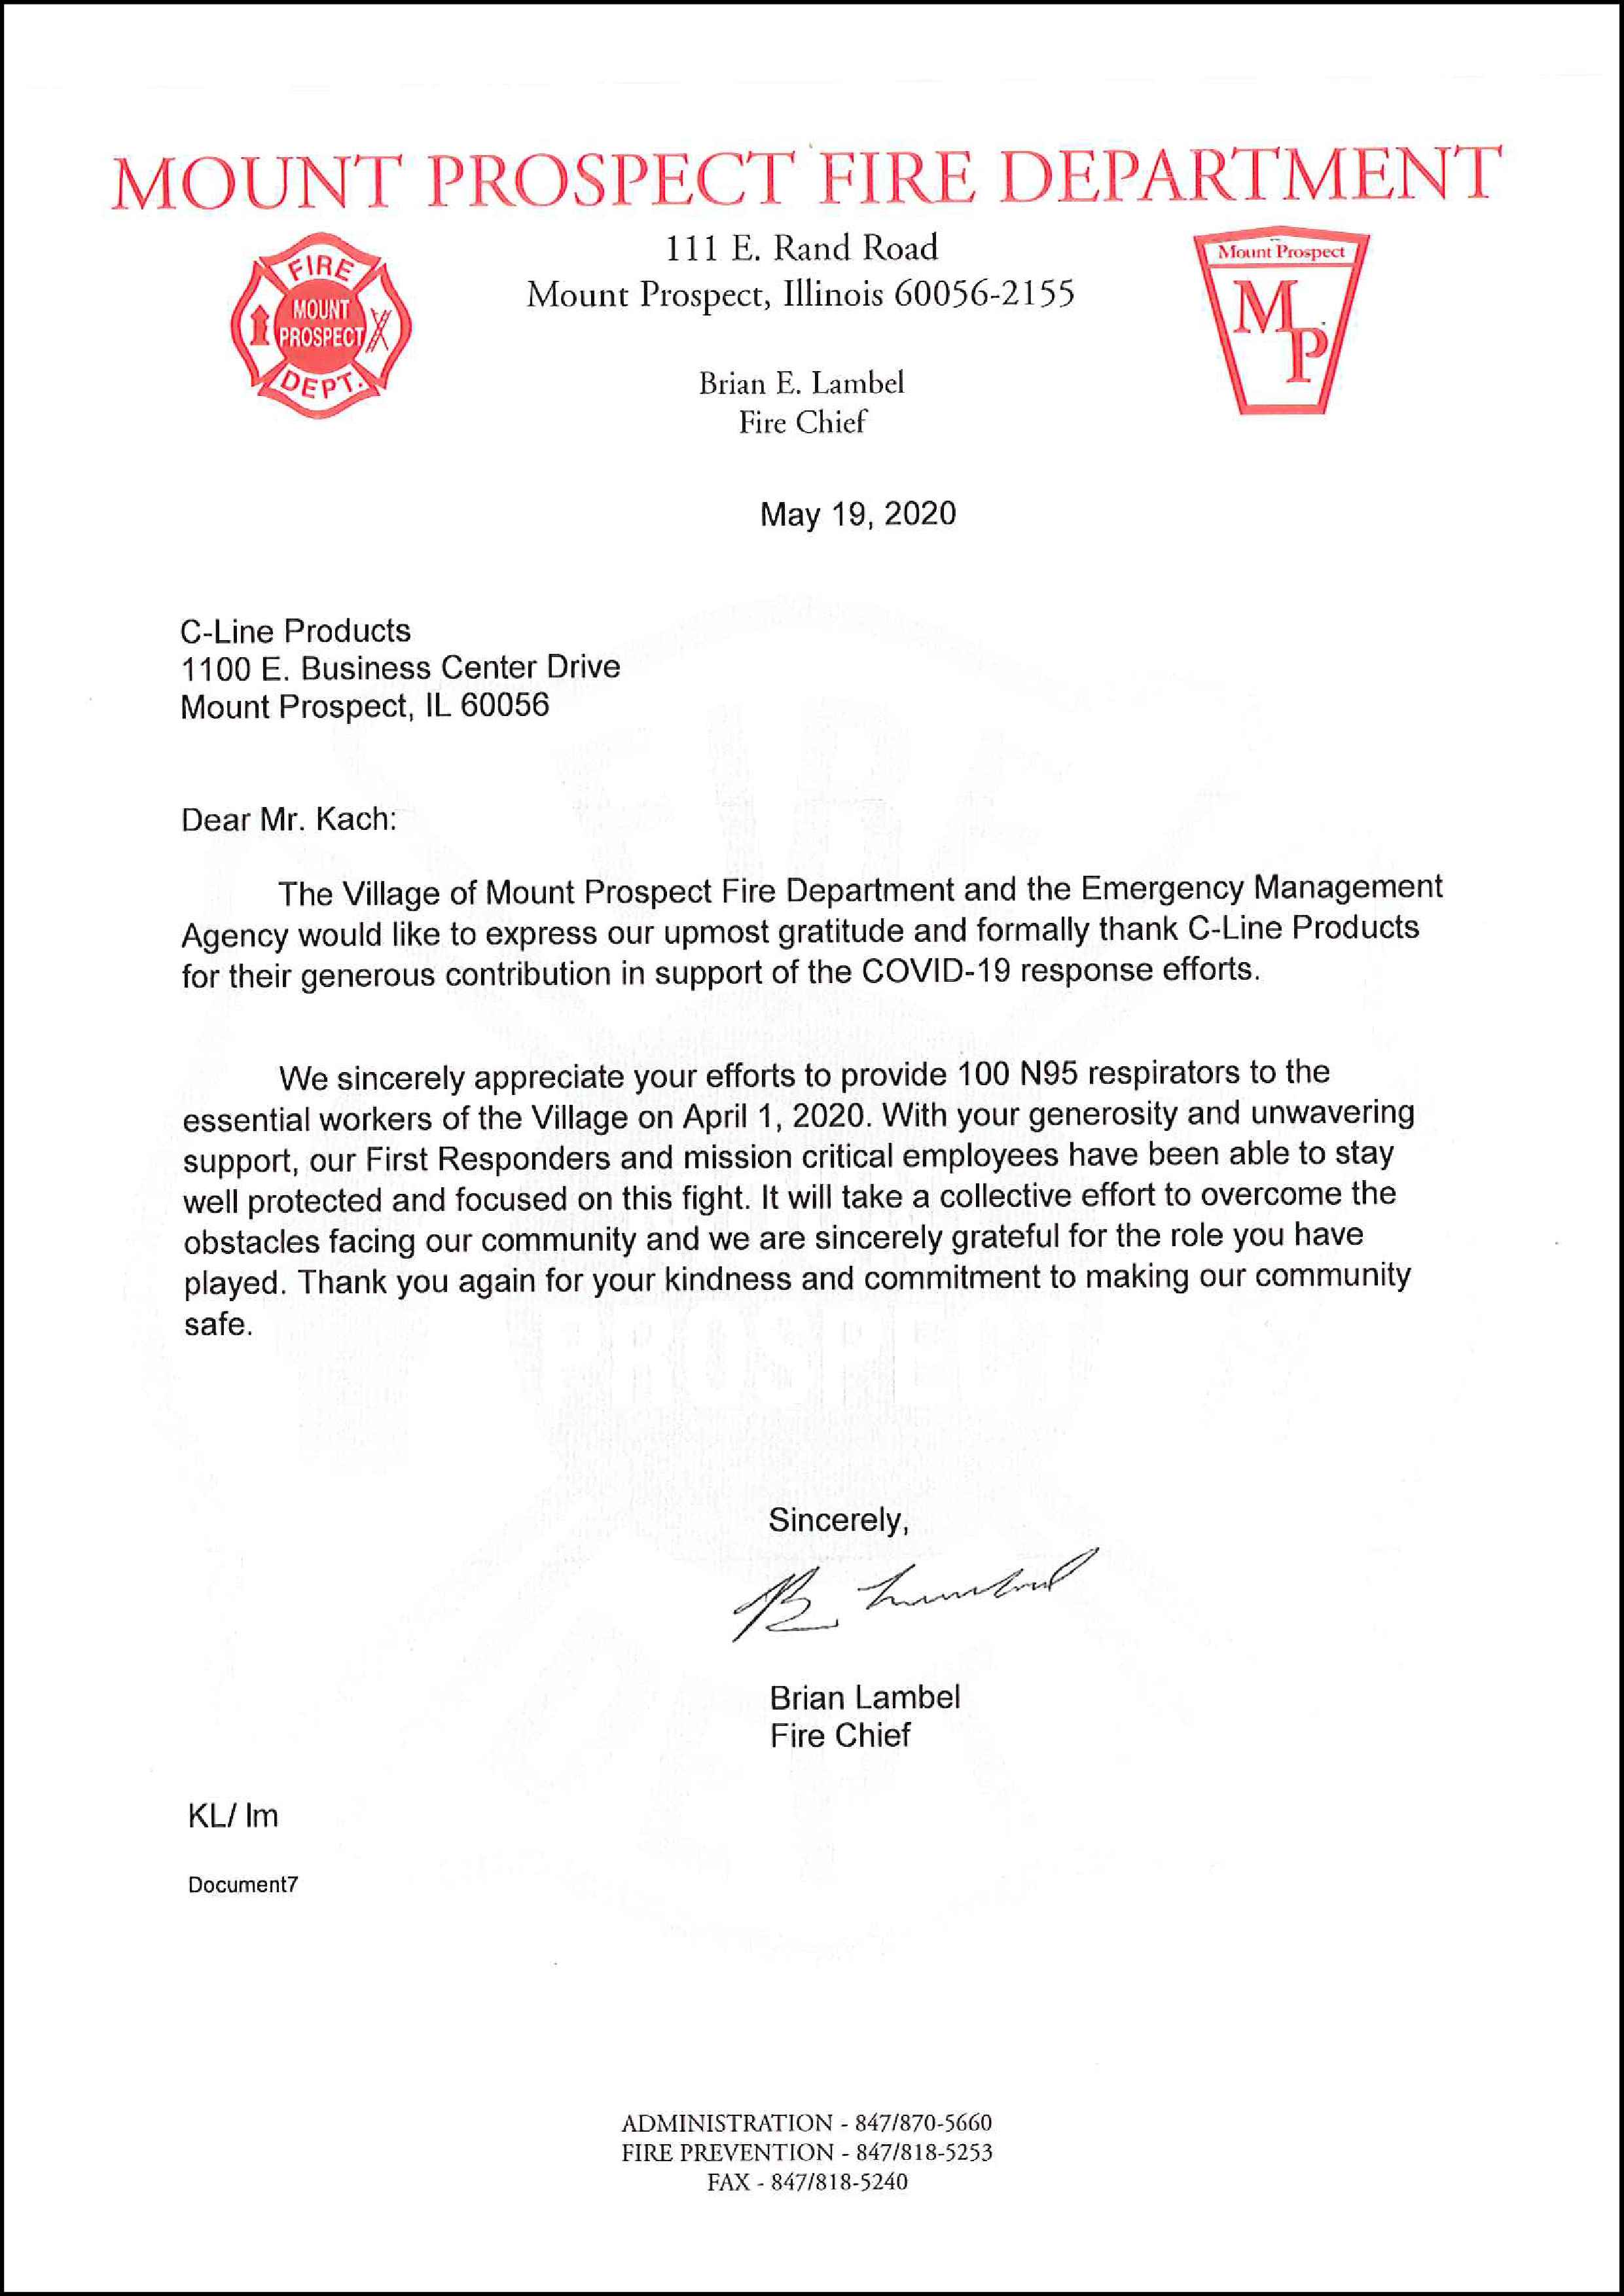 Mount Prospect Fire Department Letter